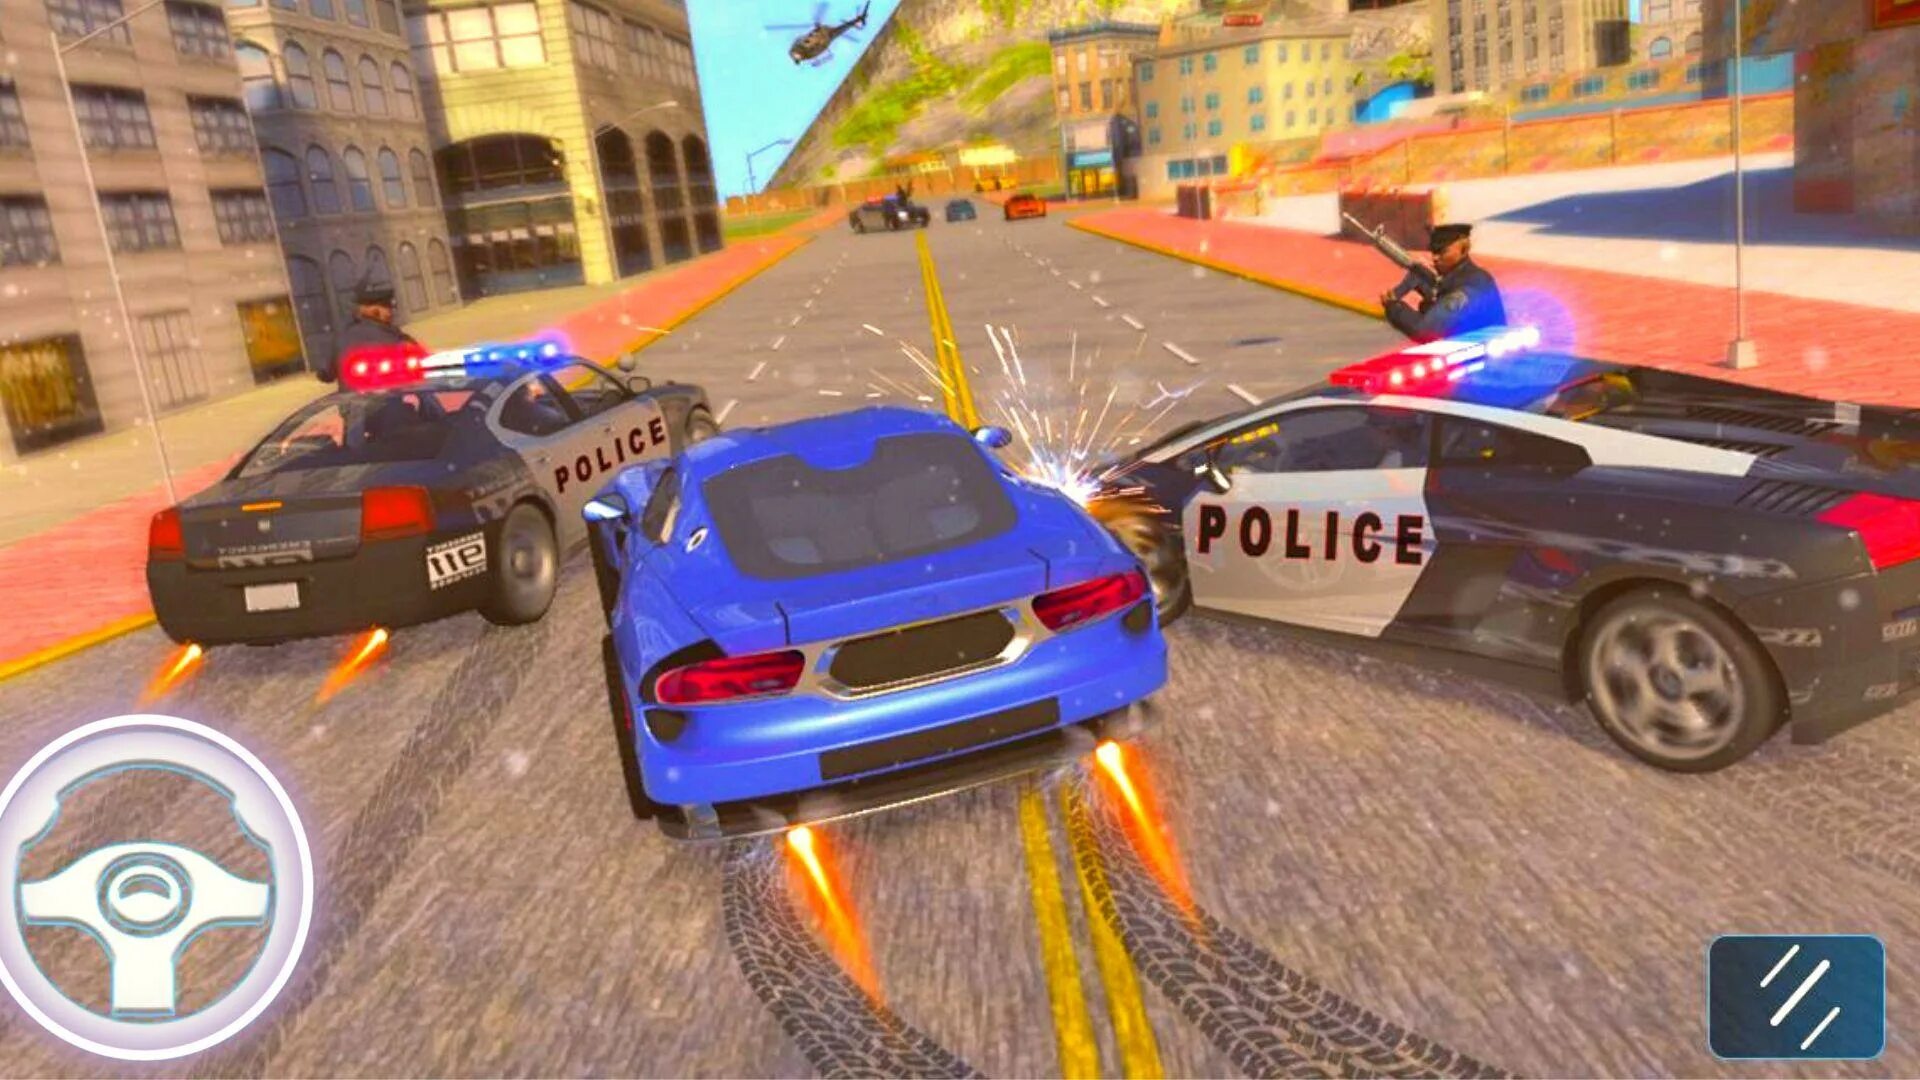 Игра полицейская погоня. Погоня от полиции на андроид игра. Игра симулятор полицейской погони. Погоня полиция в играх. Погоня от полиции игра много машин.